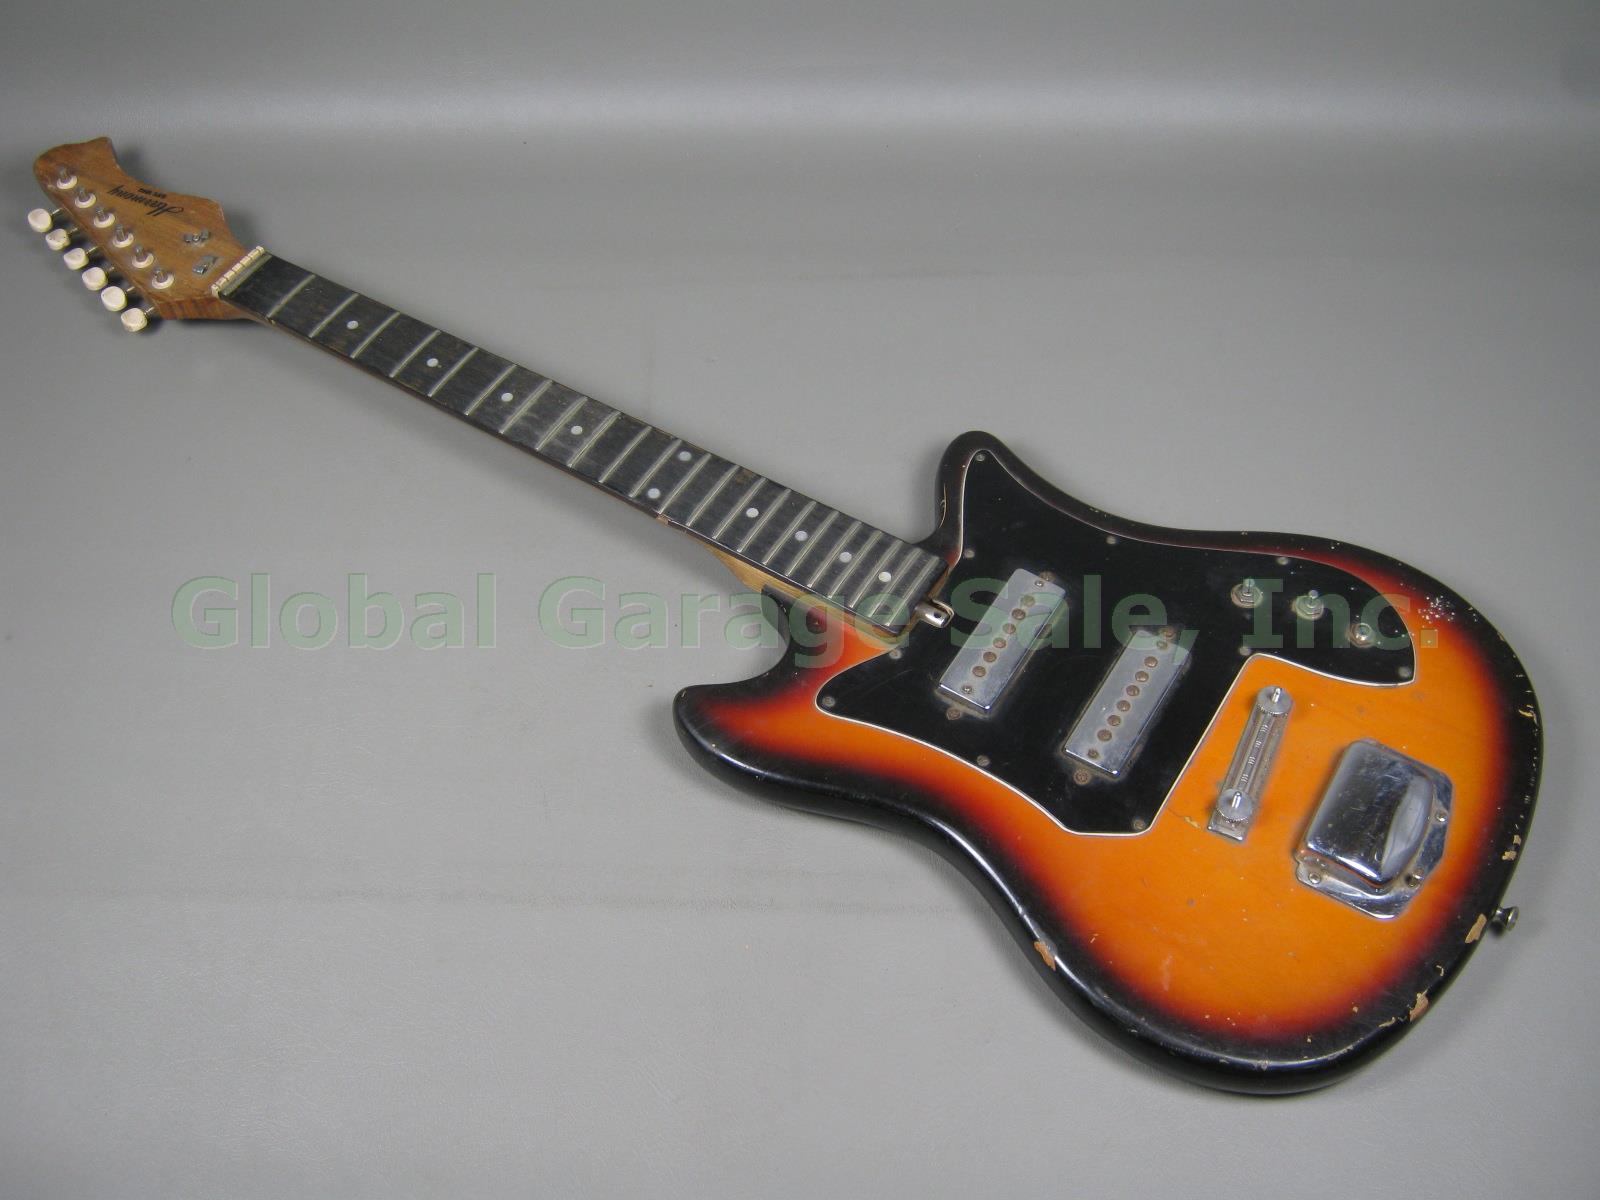 Vtg Harmony Electric Guitar MIJ? Japan? Lawsuit Era? As-Is For Parts Or Repair